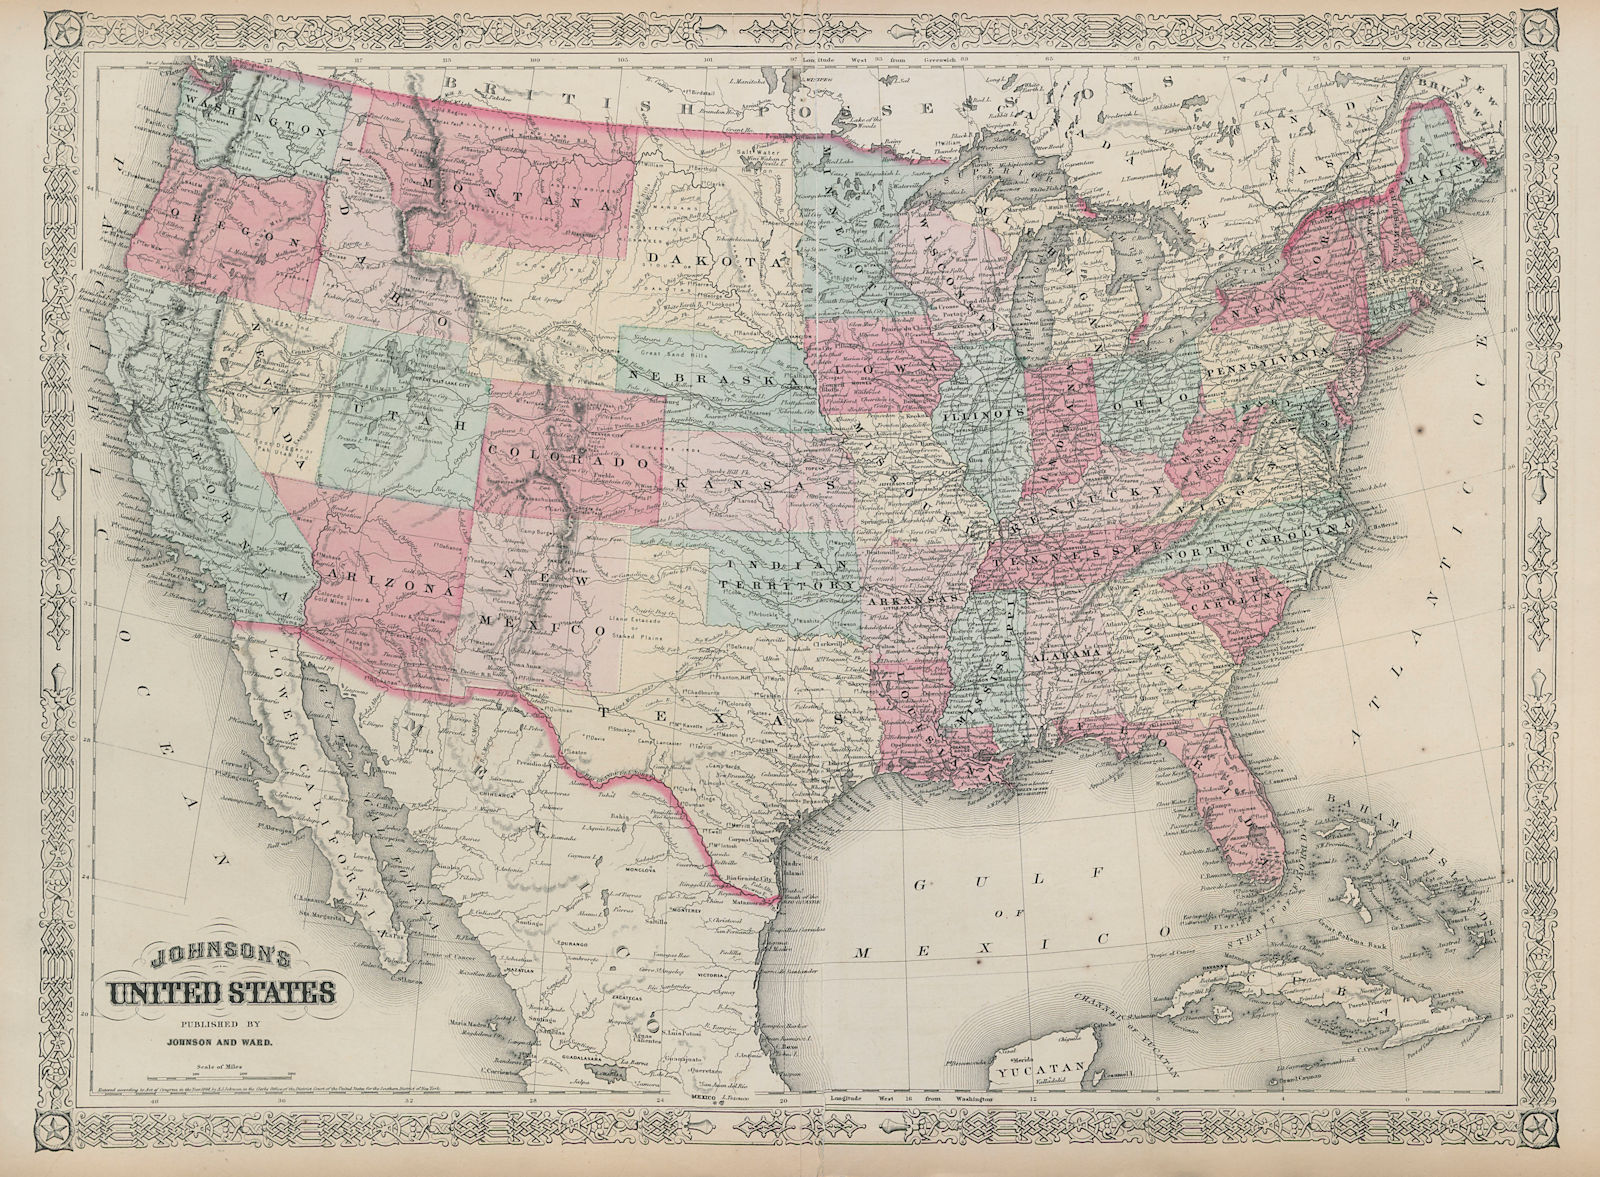 Associate Product Johnson's United States. Wyoming part of Dakota Territory 1865 old antique map